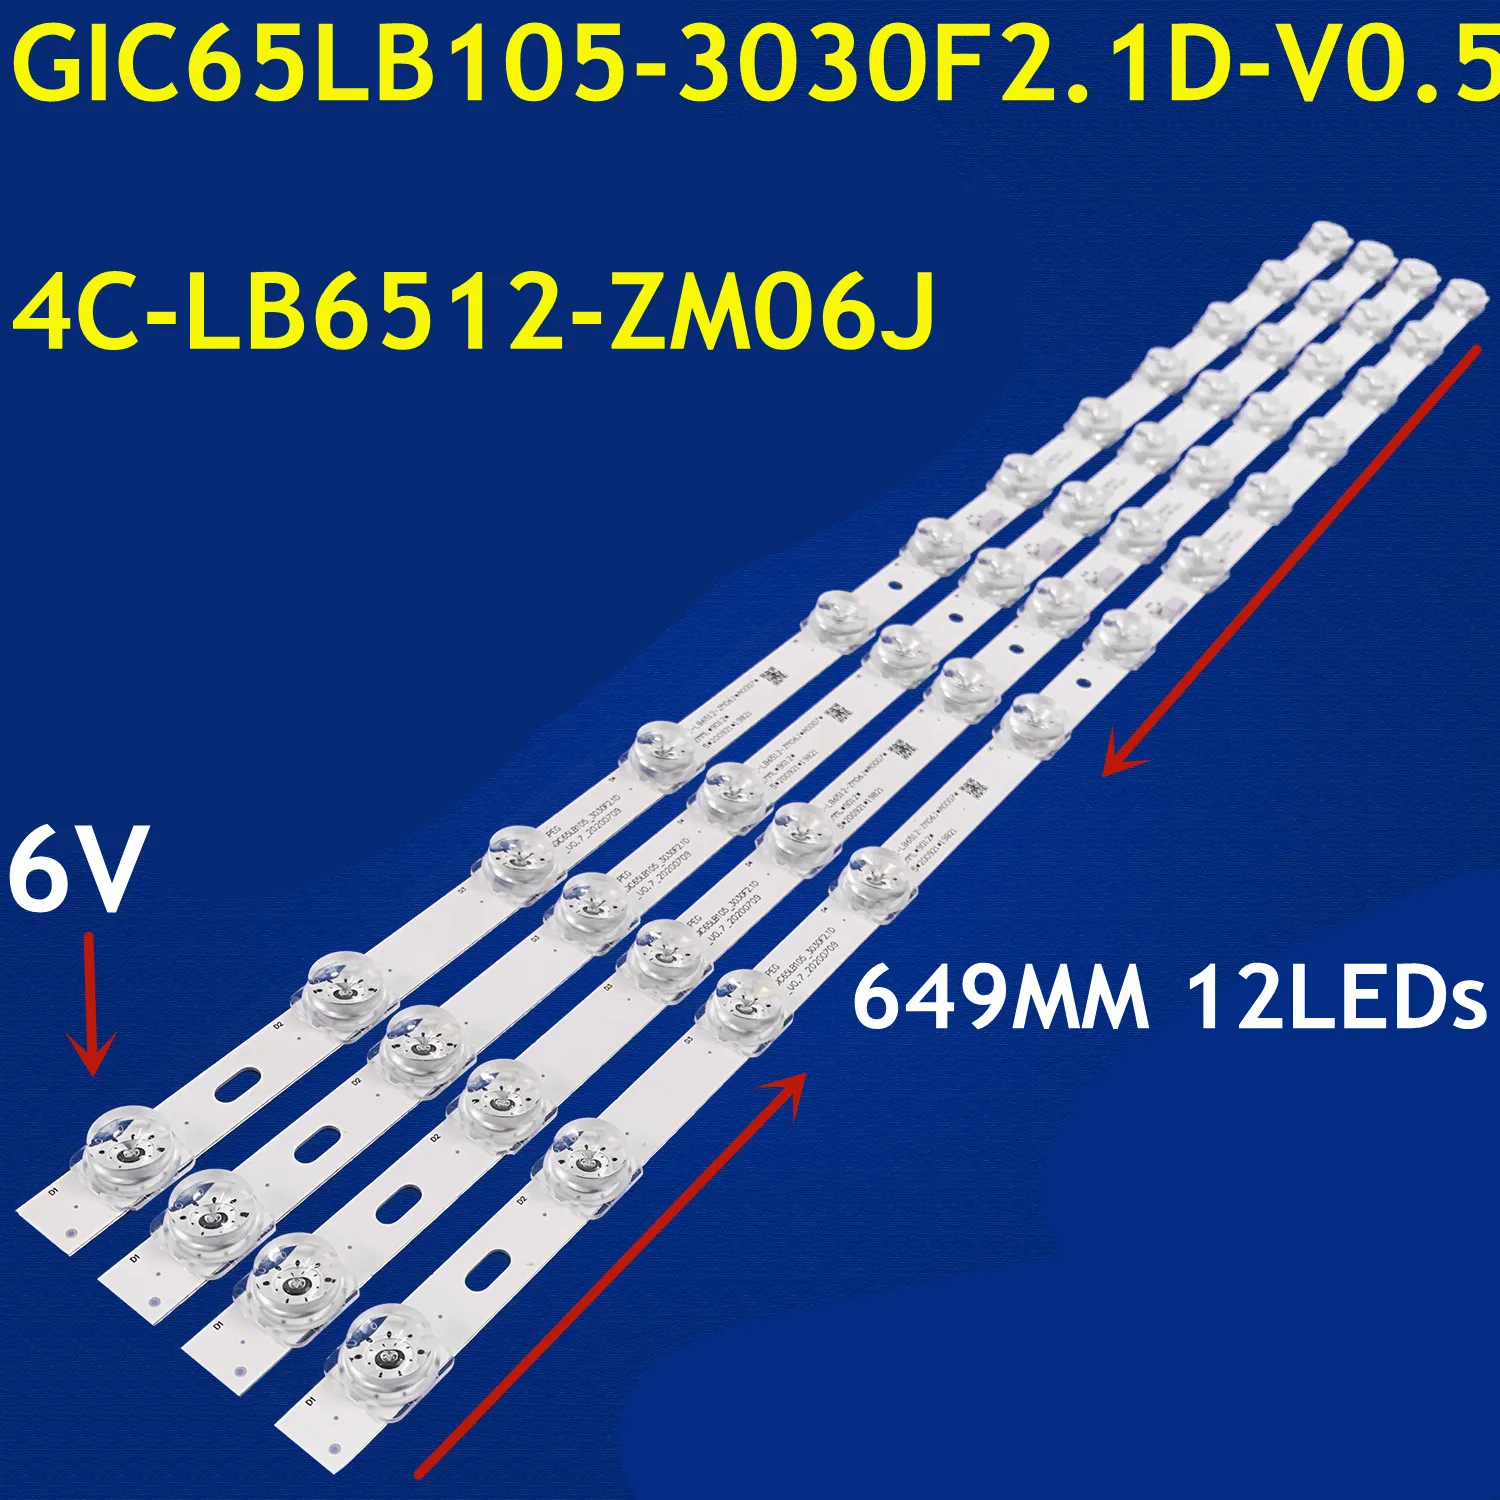 

20 PCS LED Strip GIC65LB105-3030F2.1D-V0.7 4C-LB6512-ZM06J For CL 65F8 65F9 65V6 6533F9 65V690 65N668 65A465 65V2D 65L8 65A363